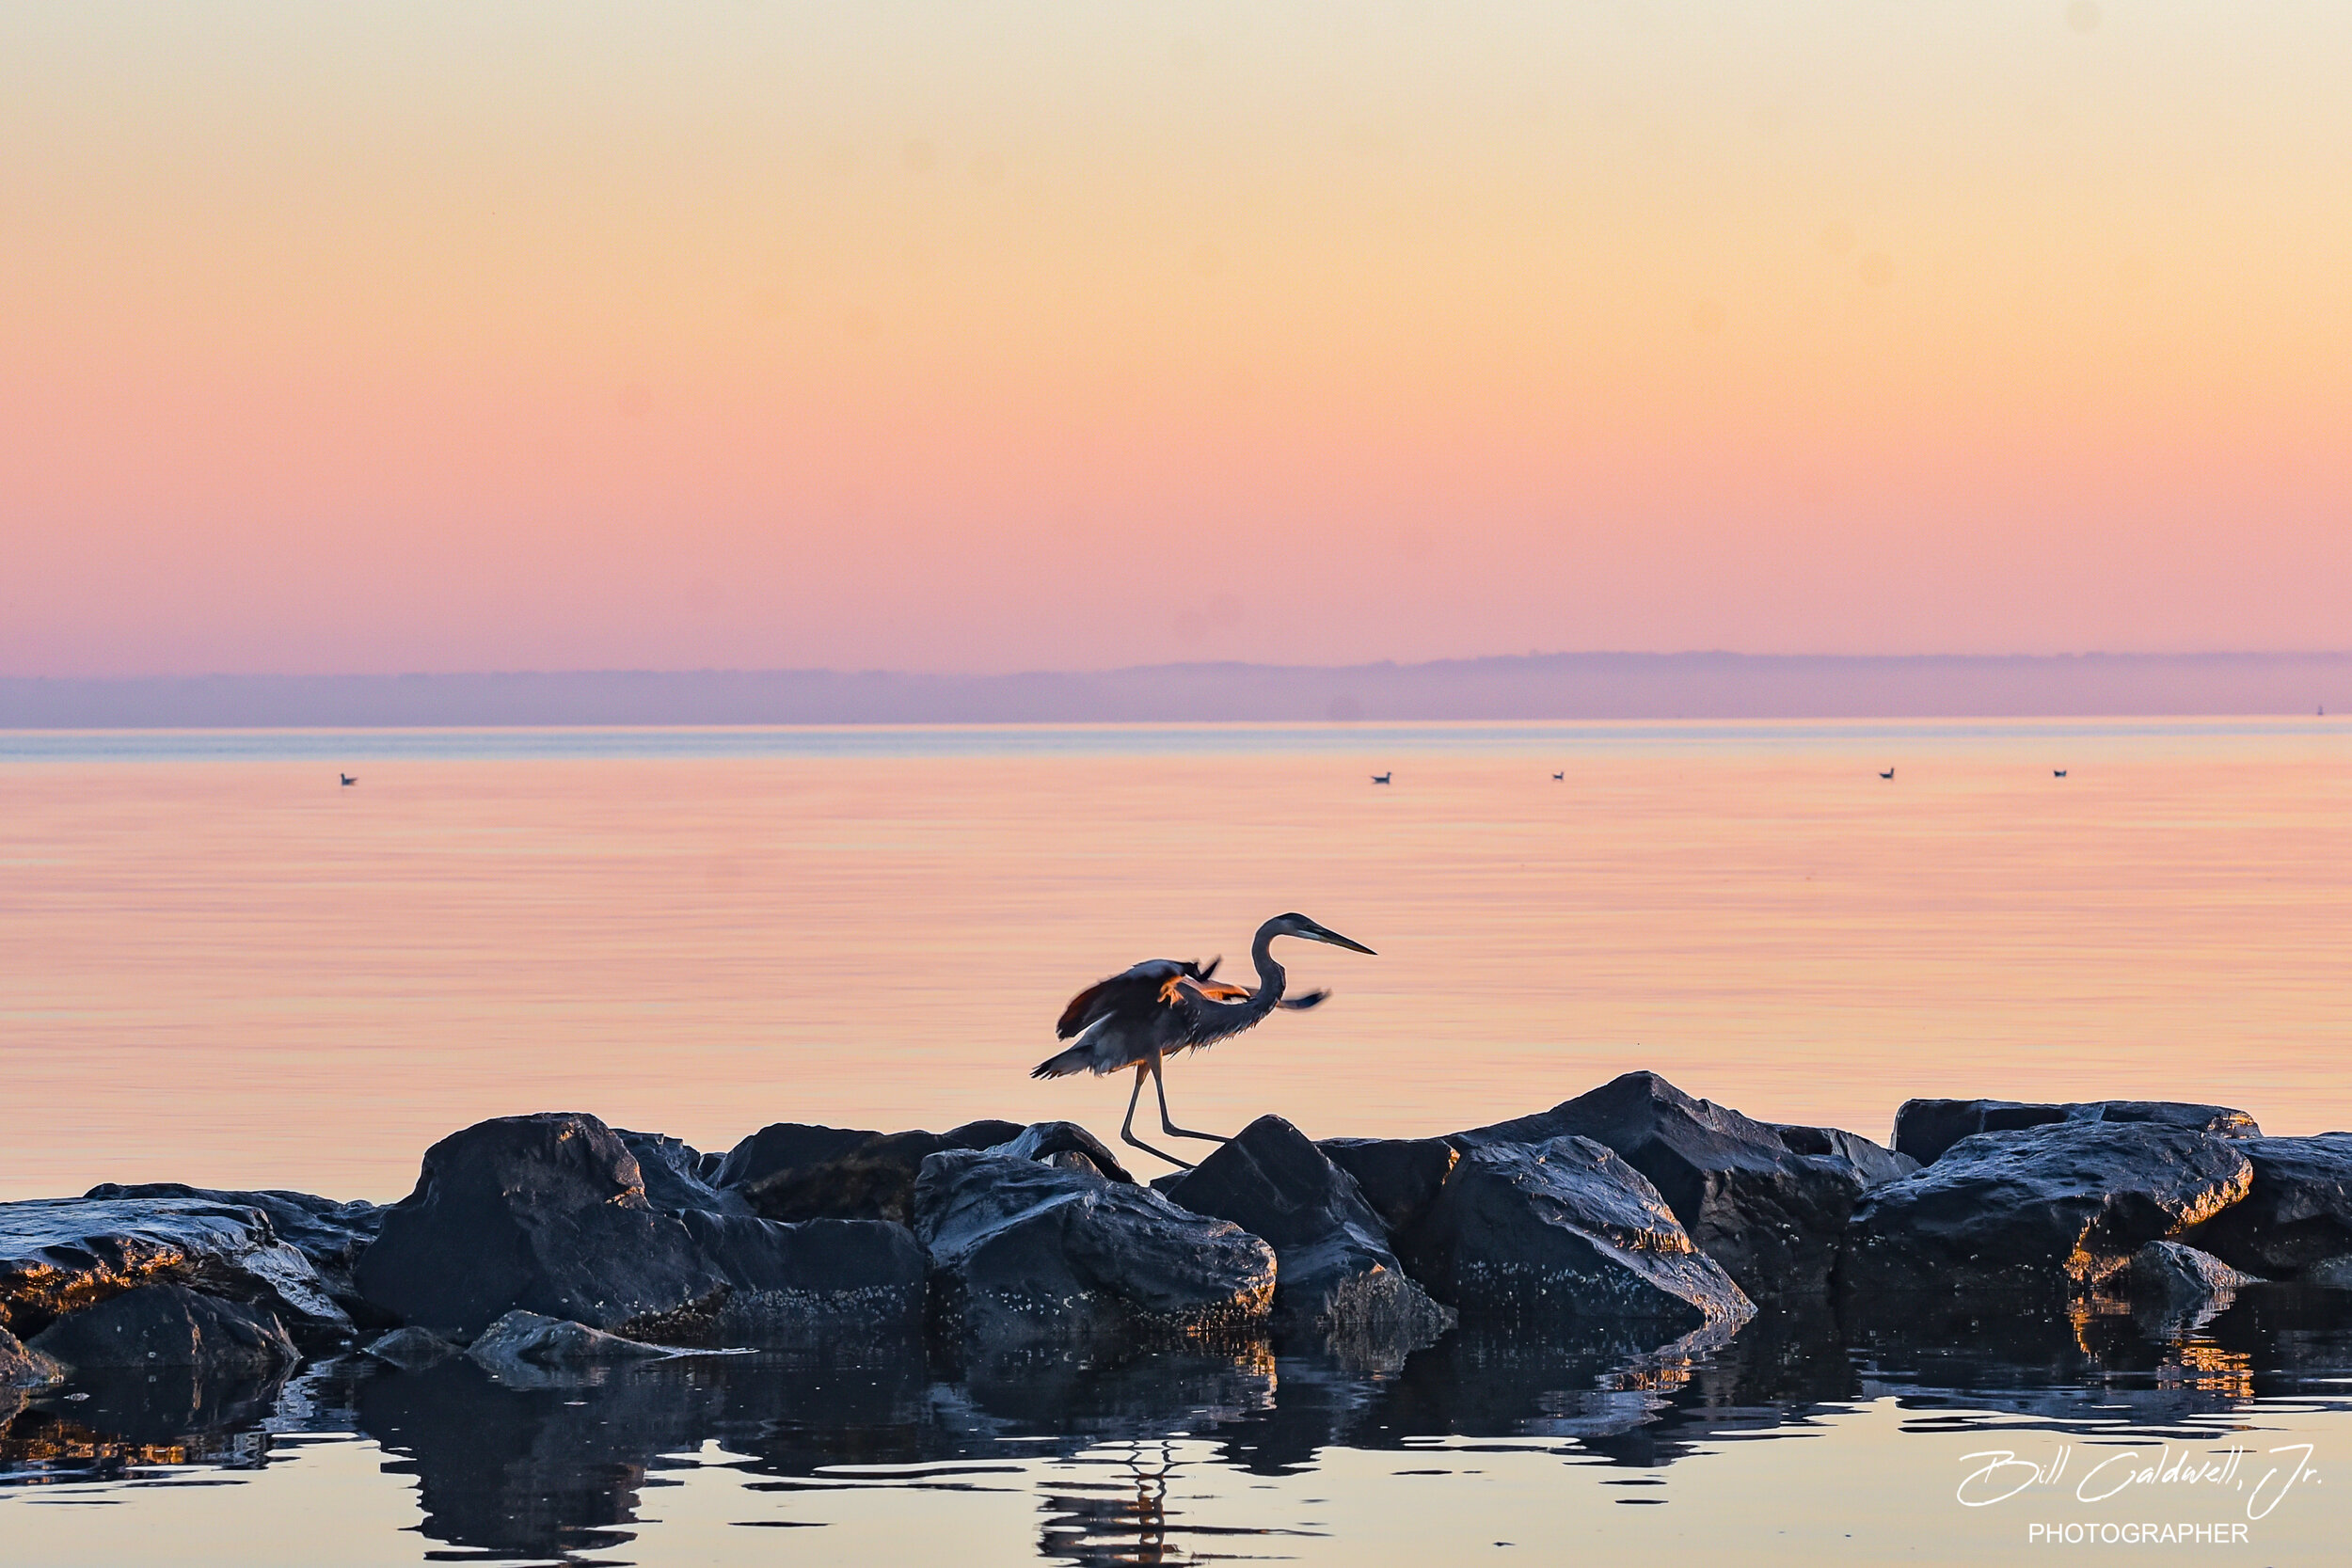 Heron hopping across the rocks, Kent Island, MD